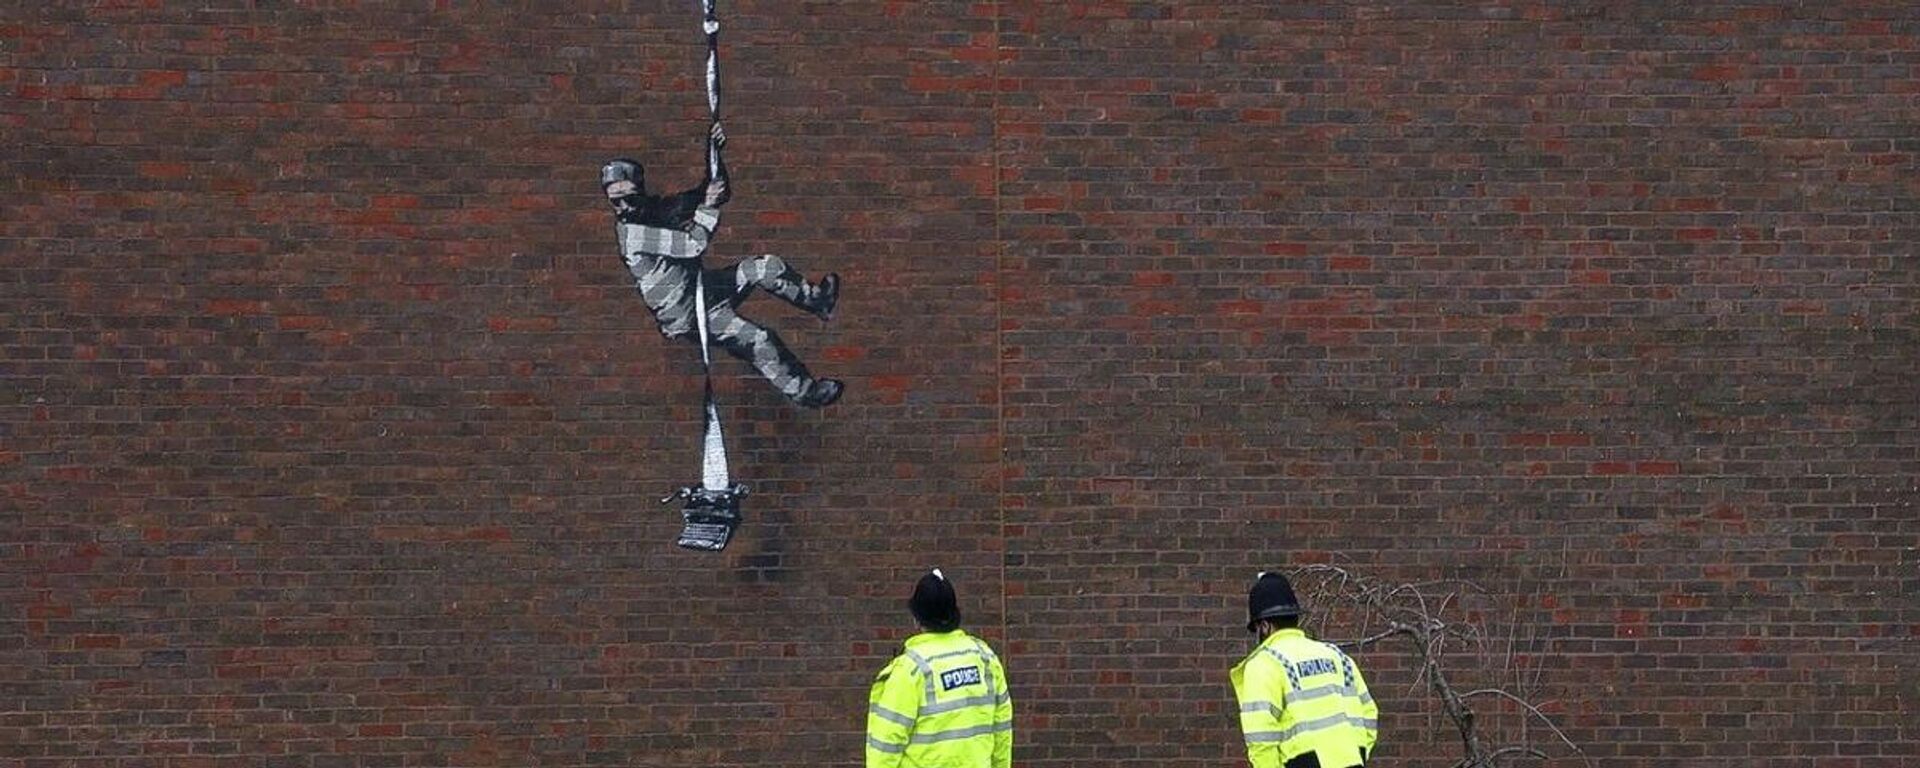 El grafiti de Banksy en la pared de la cárcel de Reading - Sputnik Mundo, 1920, 05.03.2021